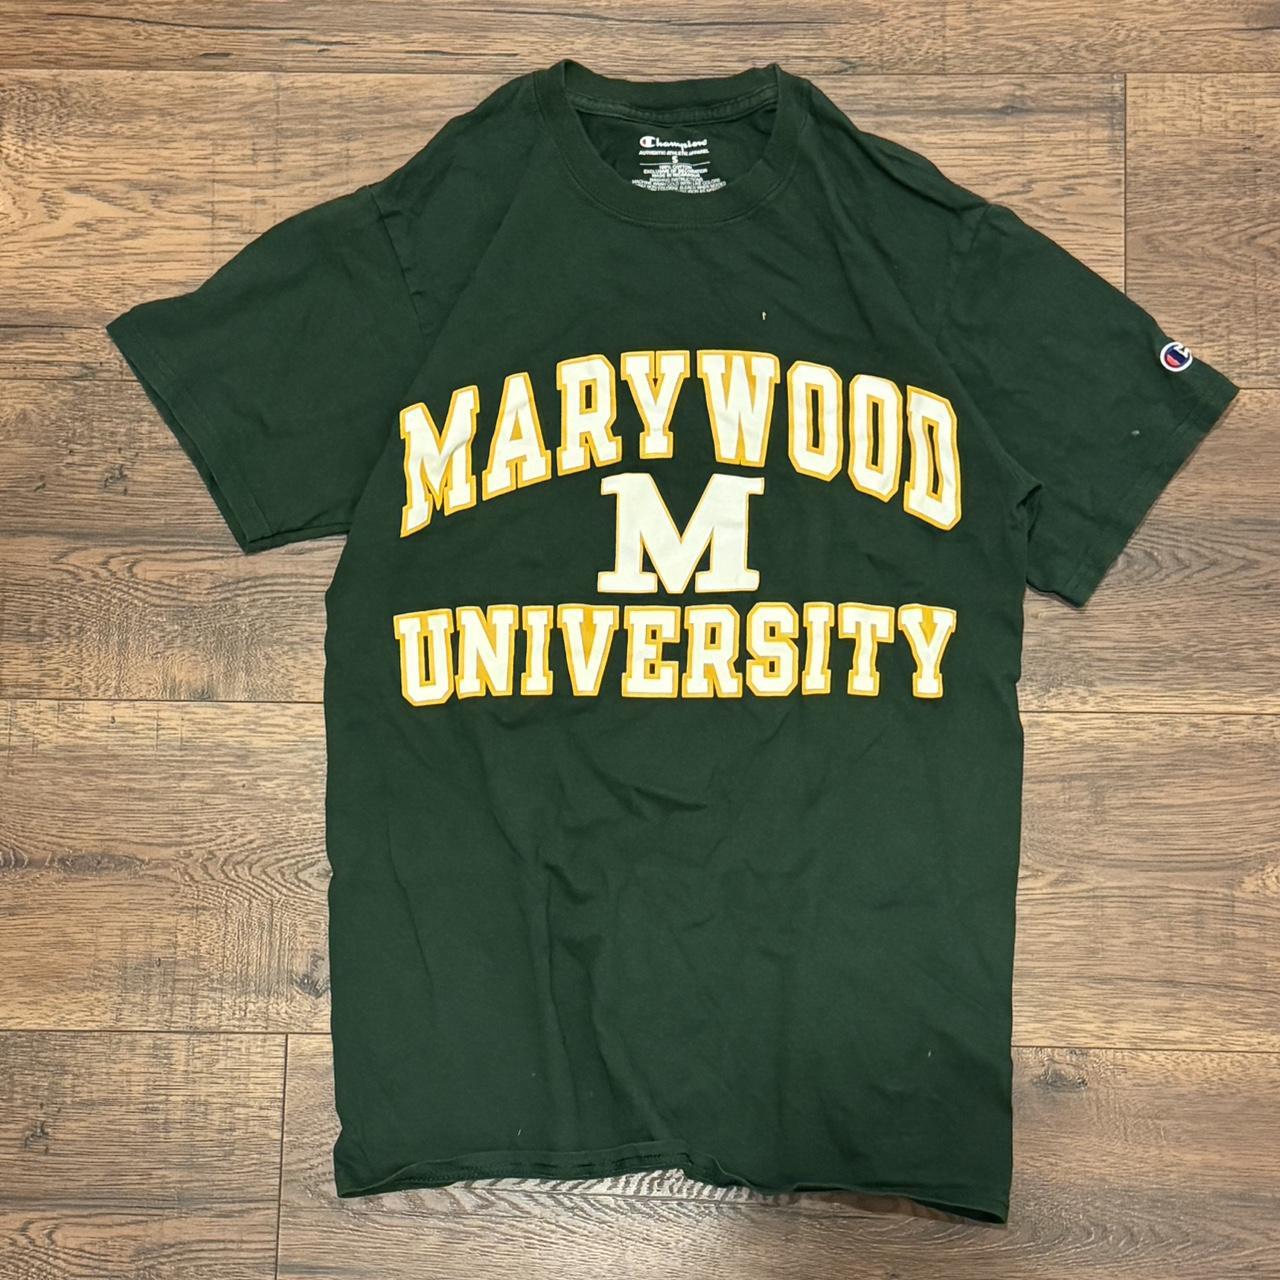 Marywood University t-shirt Details - + Champion +... - Depop